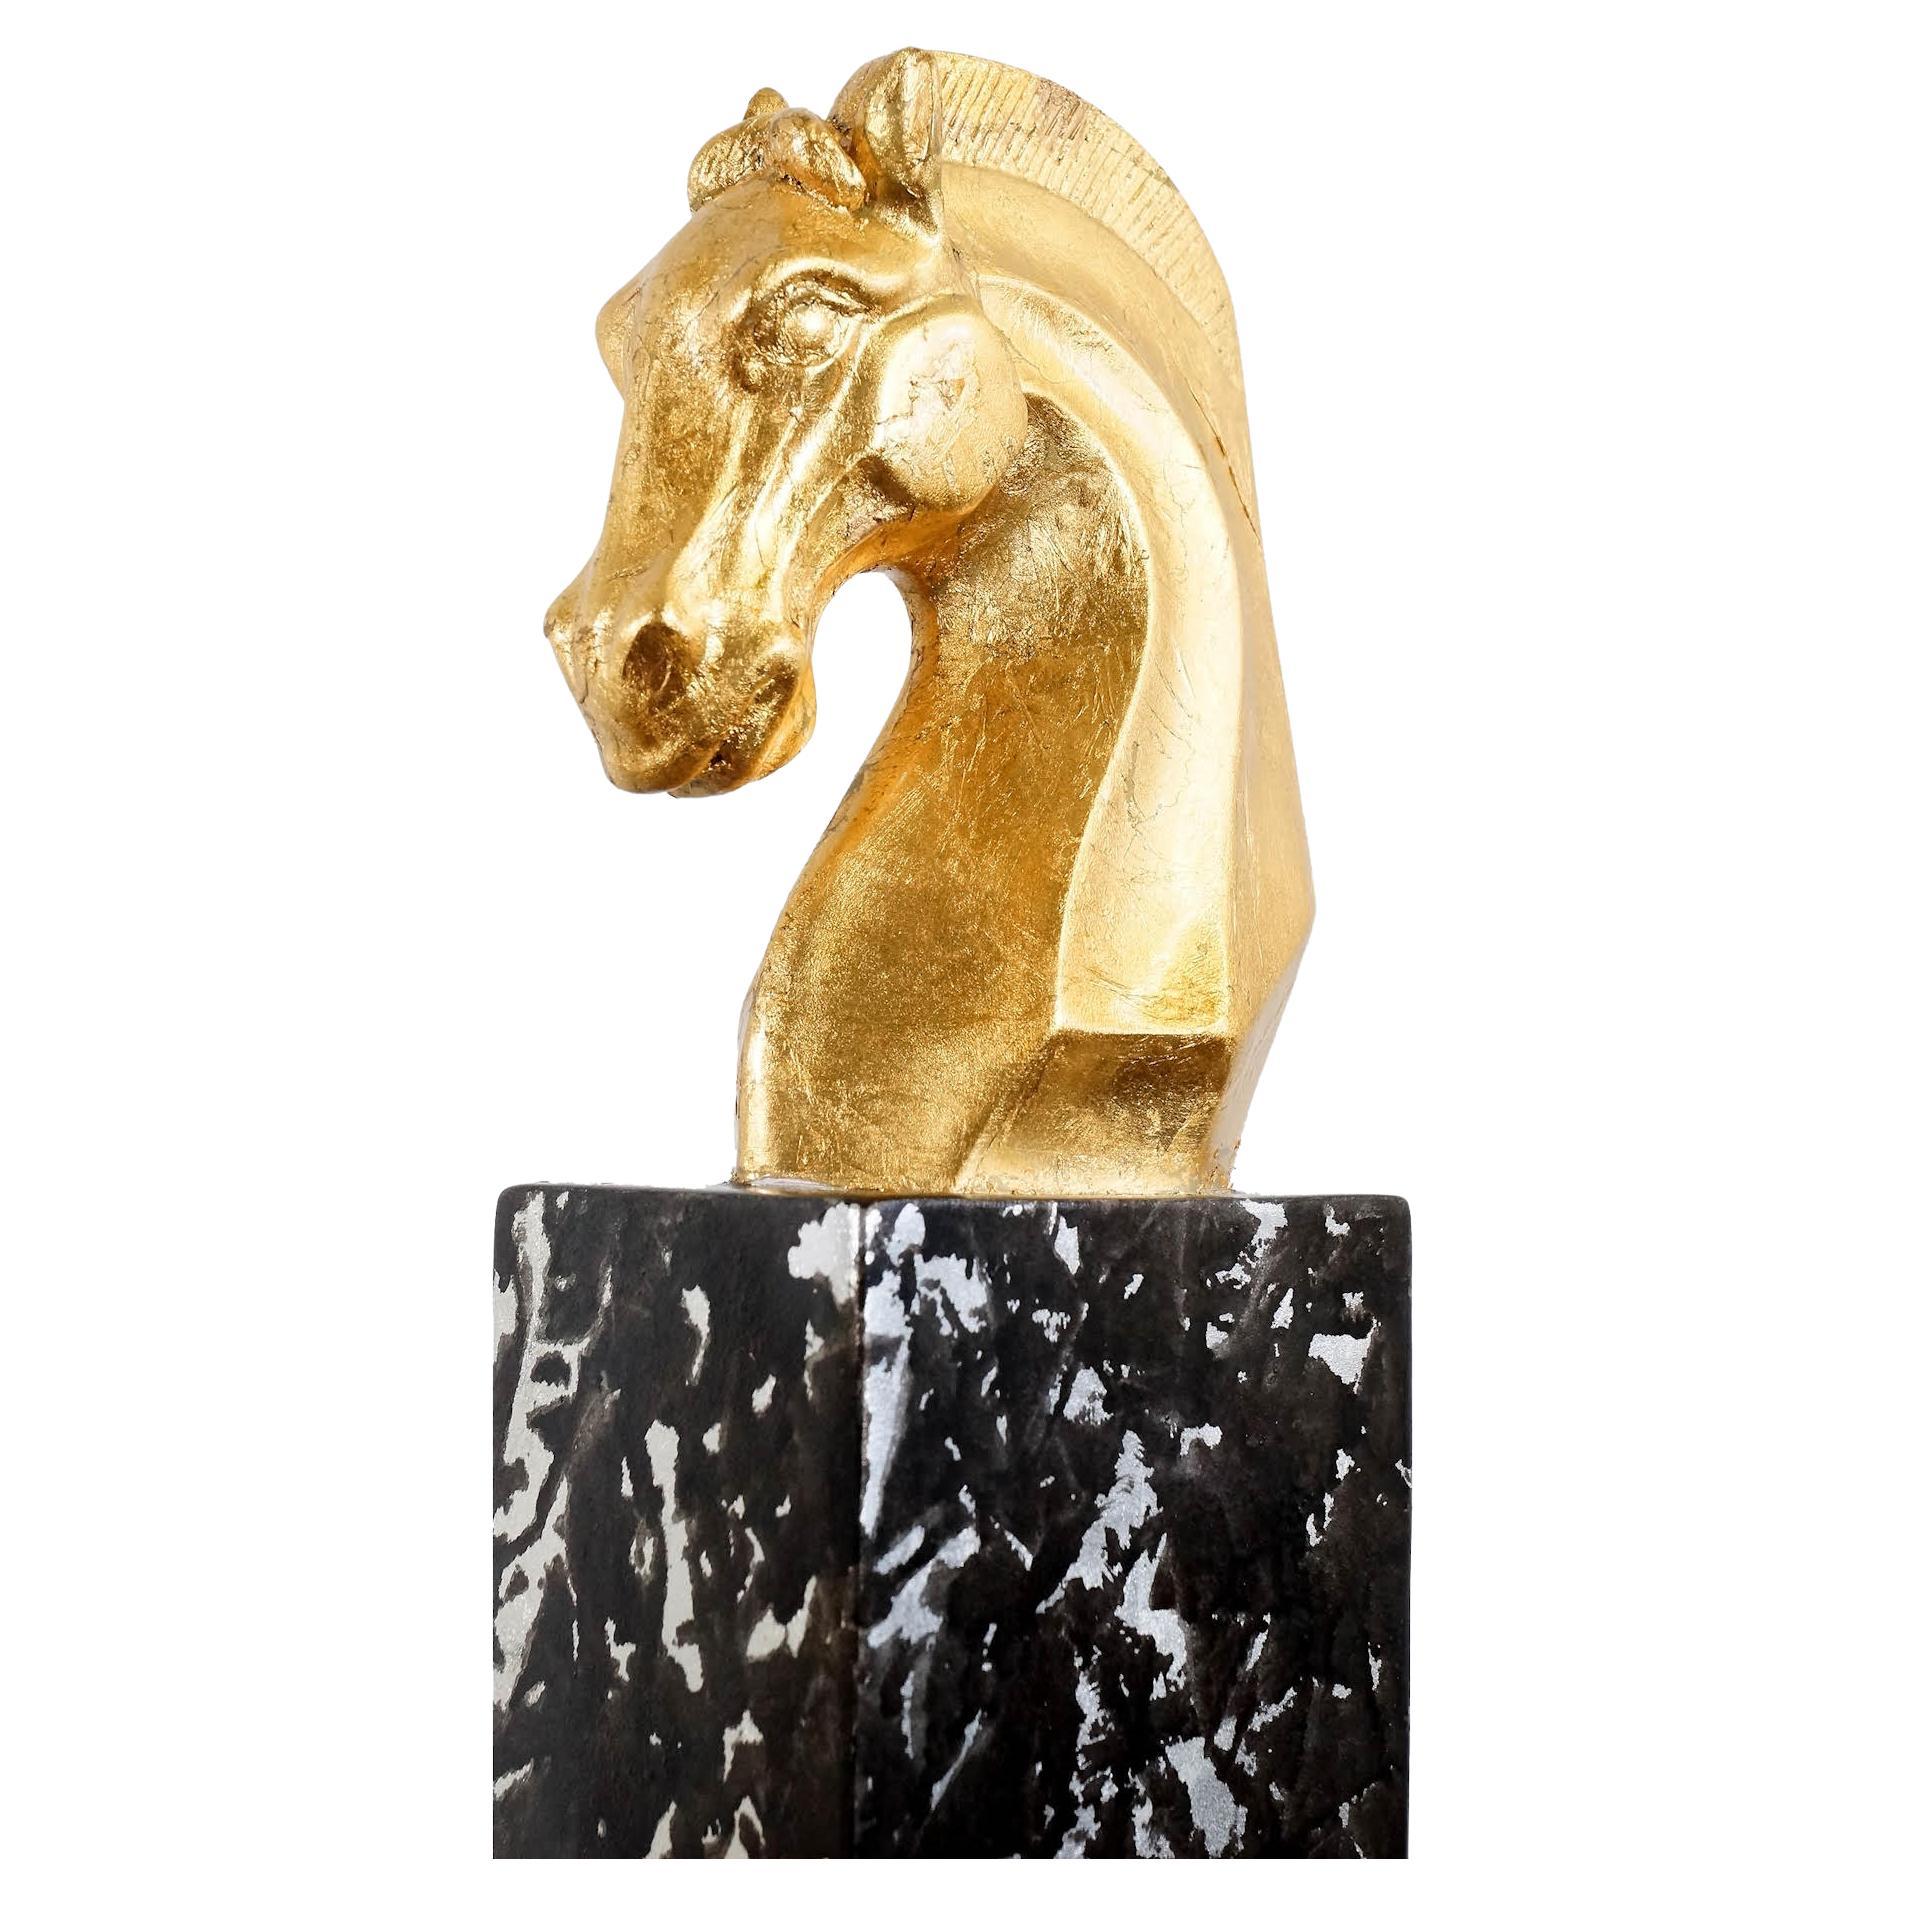 Vergoldete Pferdekopf-Skulptur aus Fiberglas, Contemporary Work, XXI.